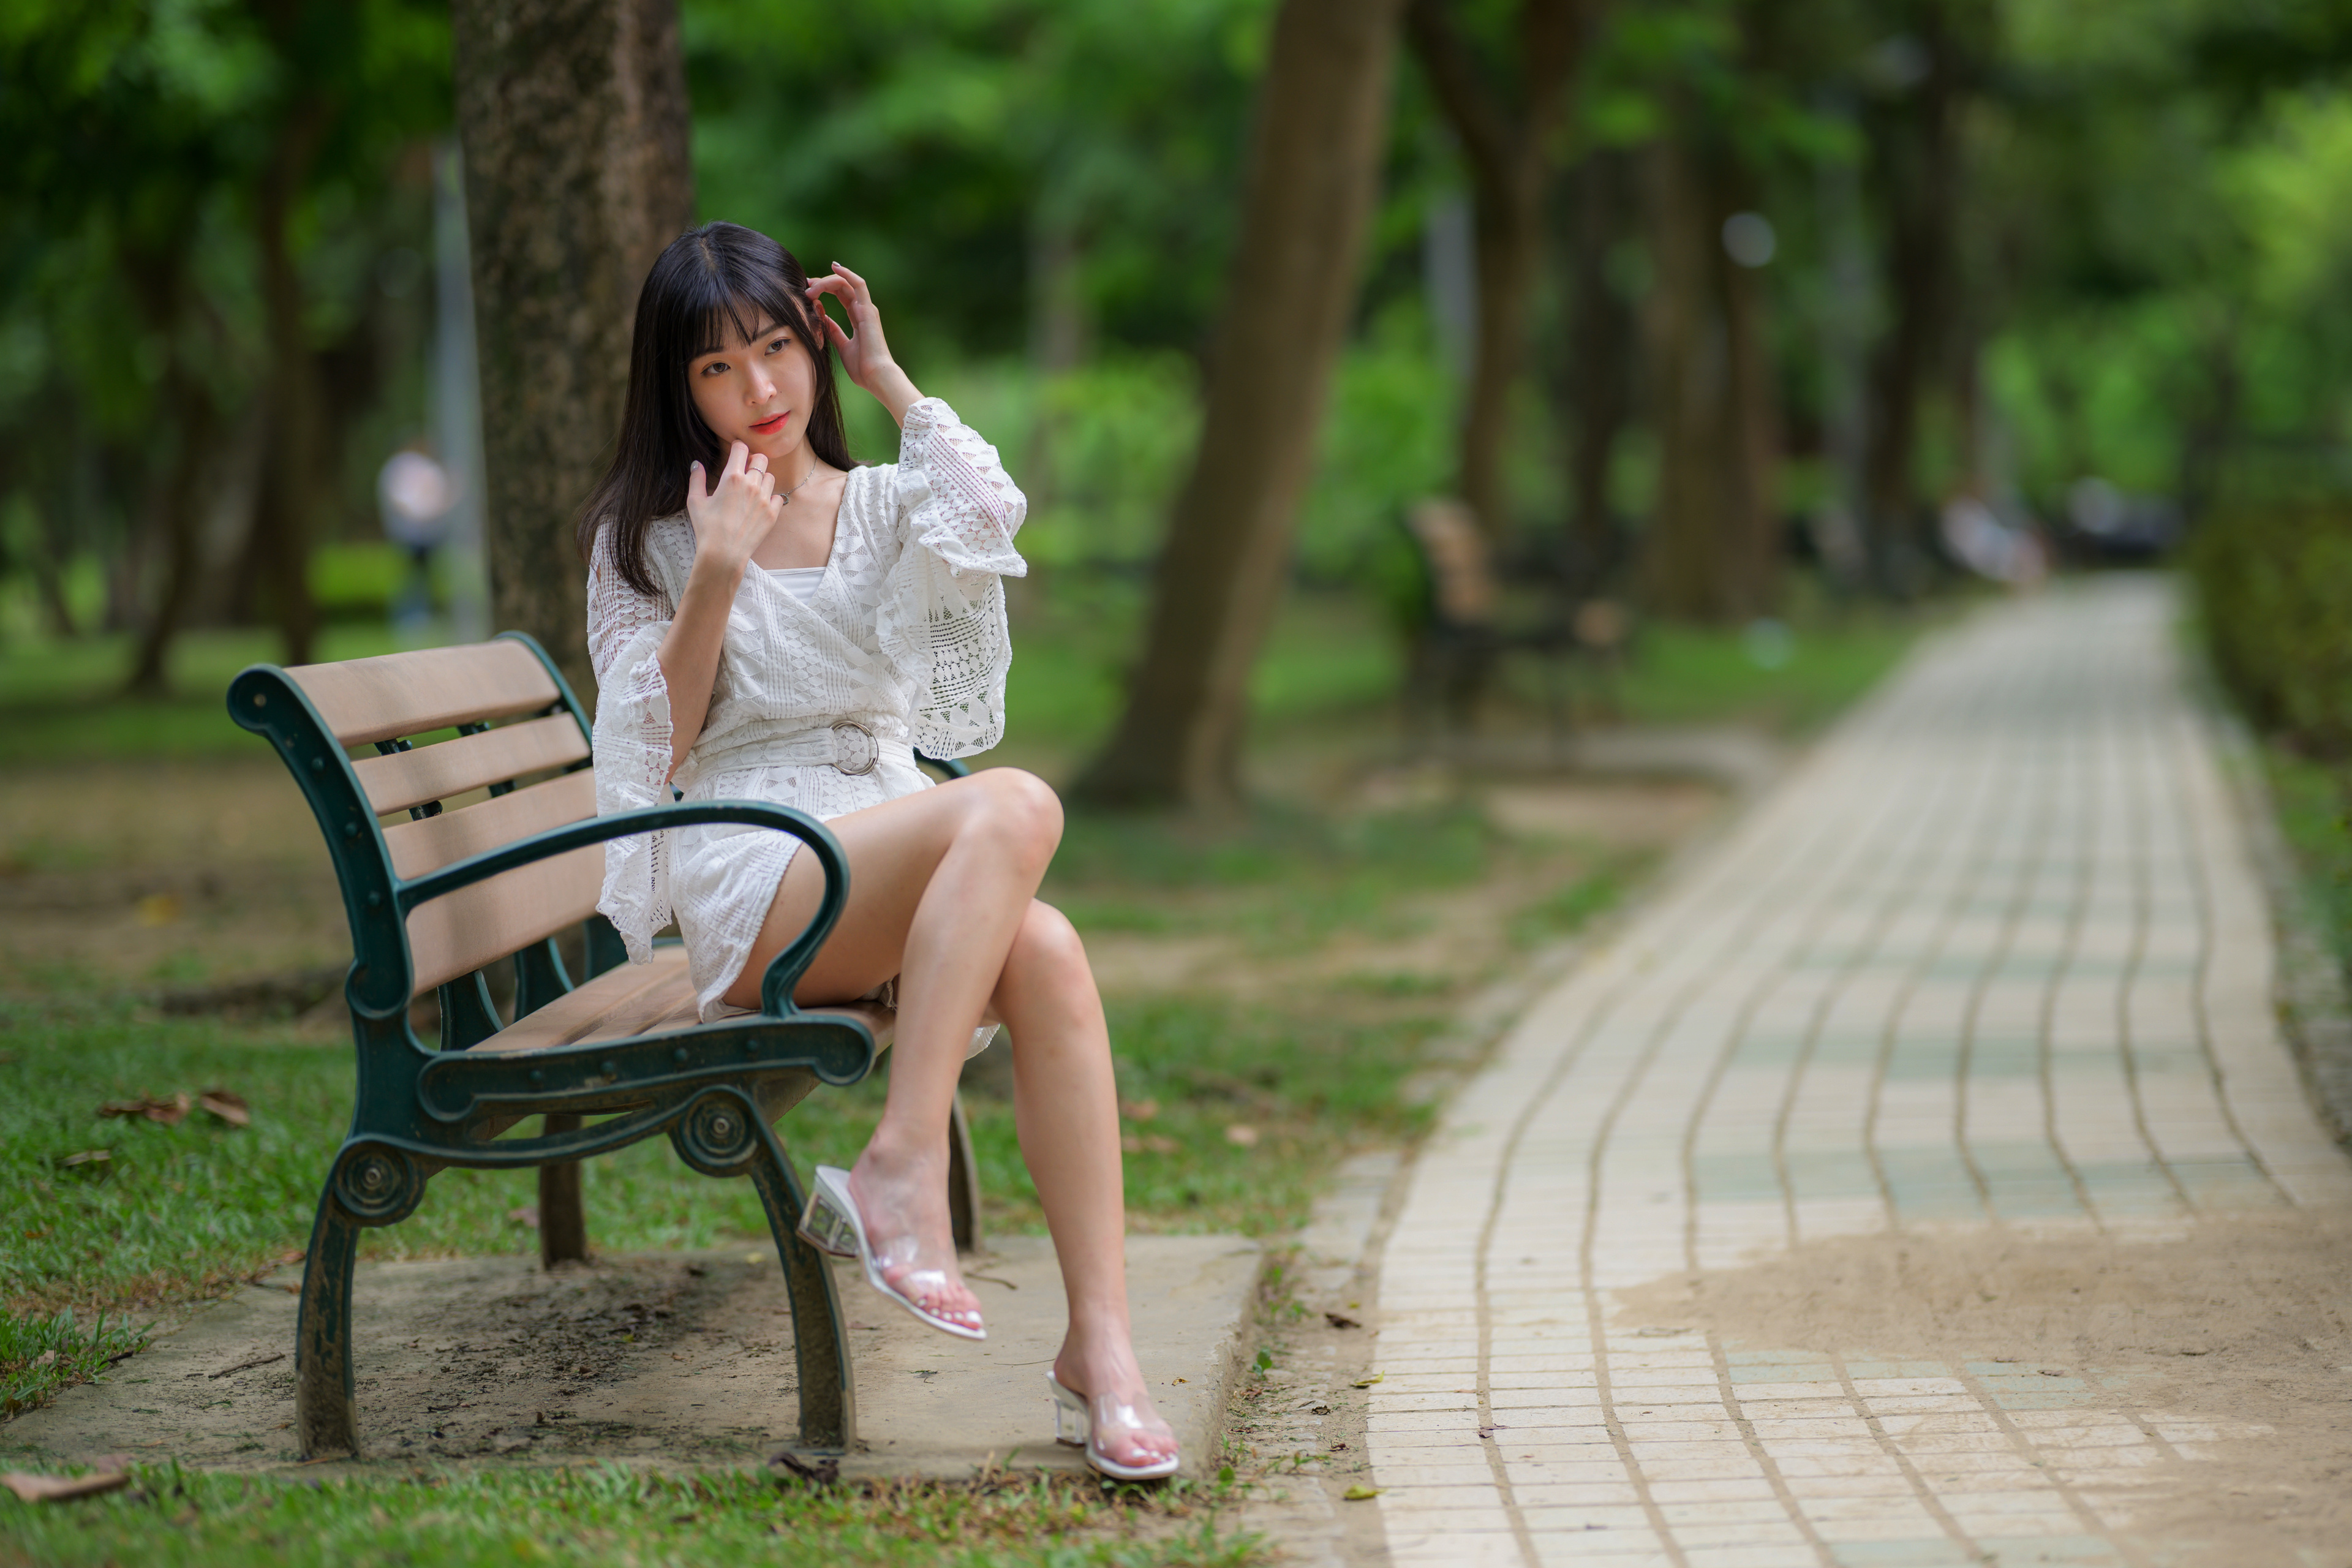 Asian Model Women Dark Hair Long Hair Sitting Bench Barefoot Sandal 3840x2560